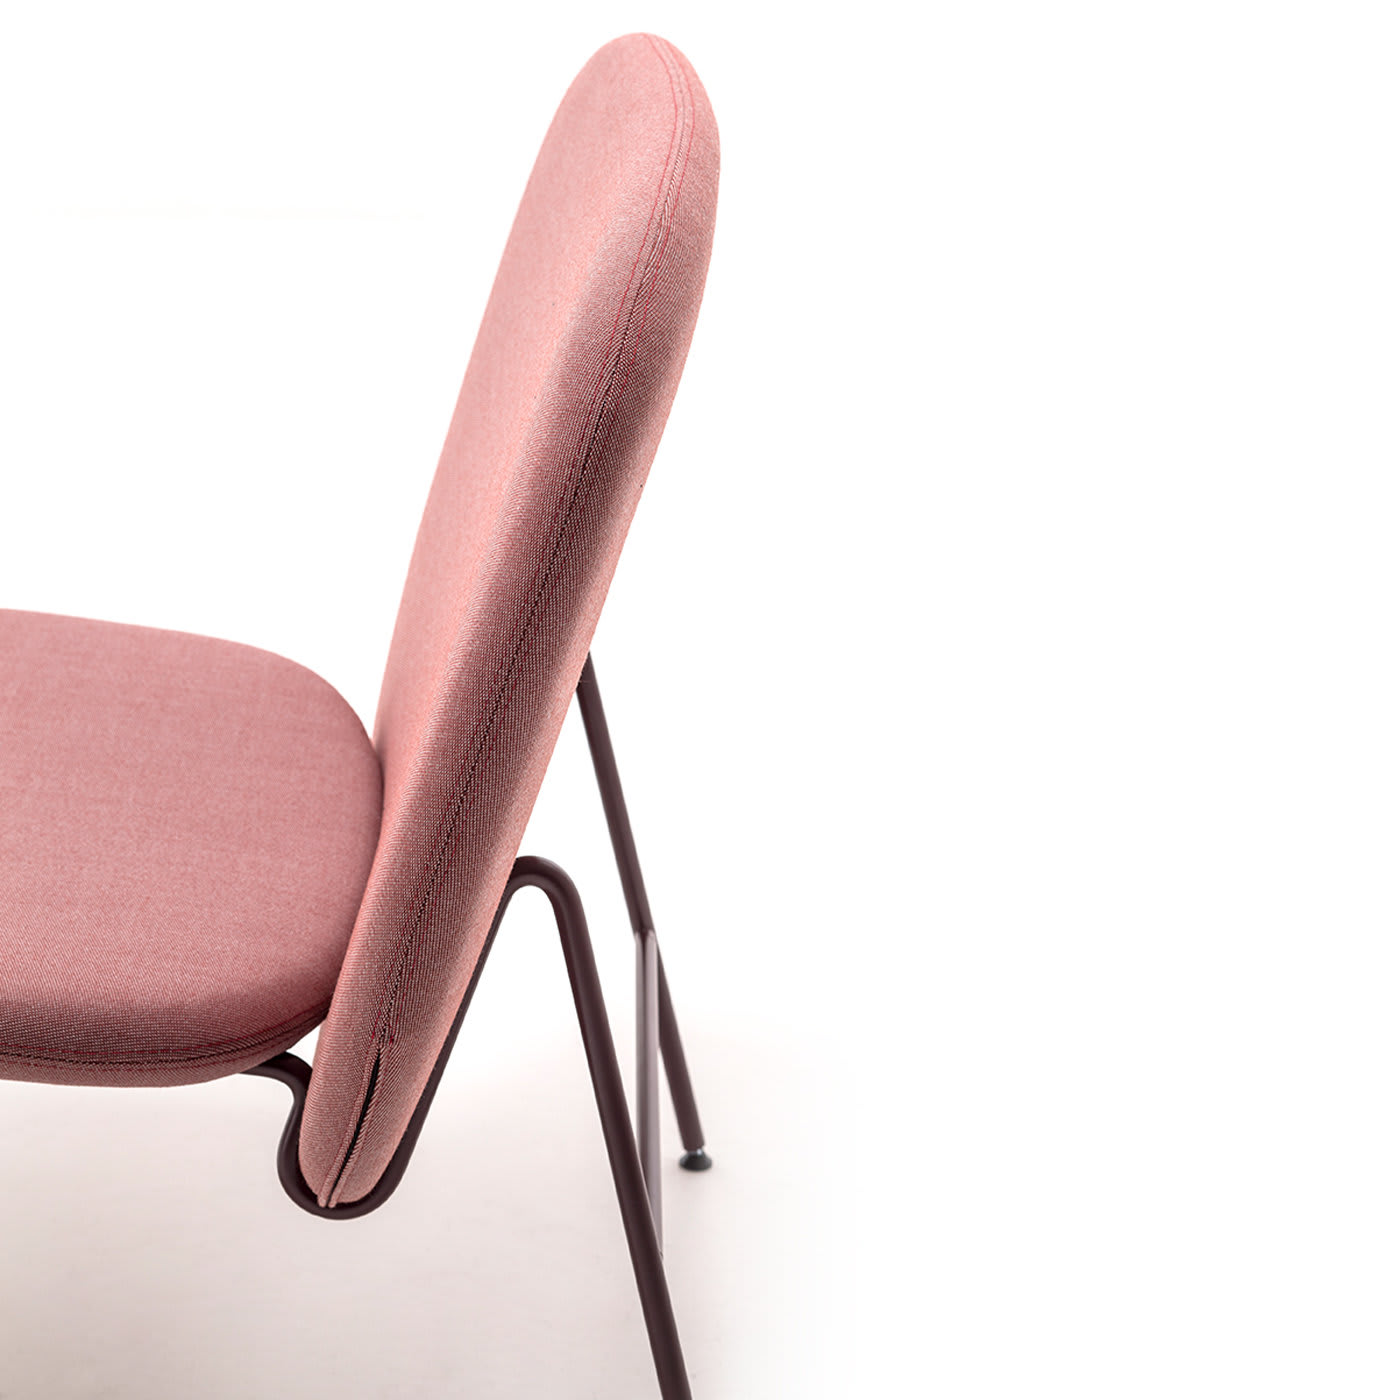 Ala Textured Chair by Sebastian Herkner - La Cividina